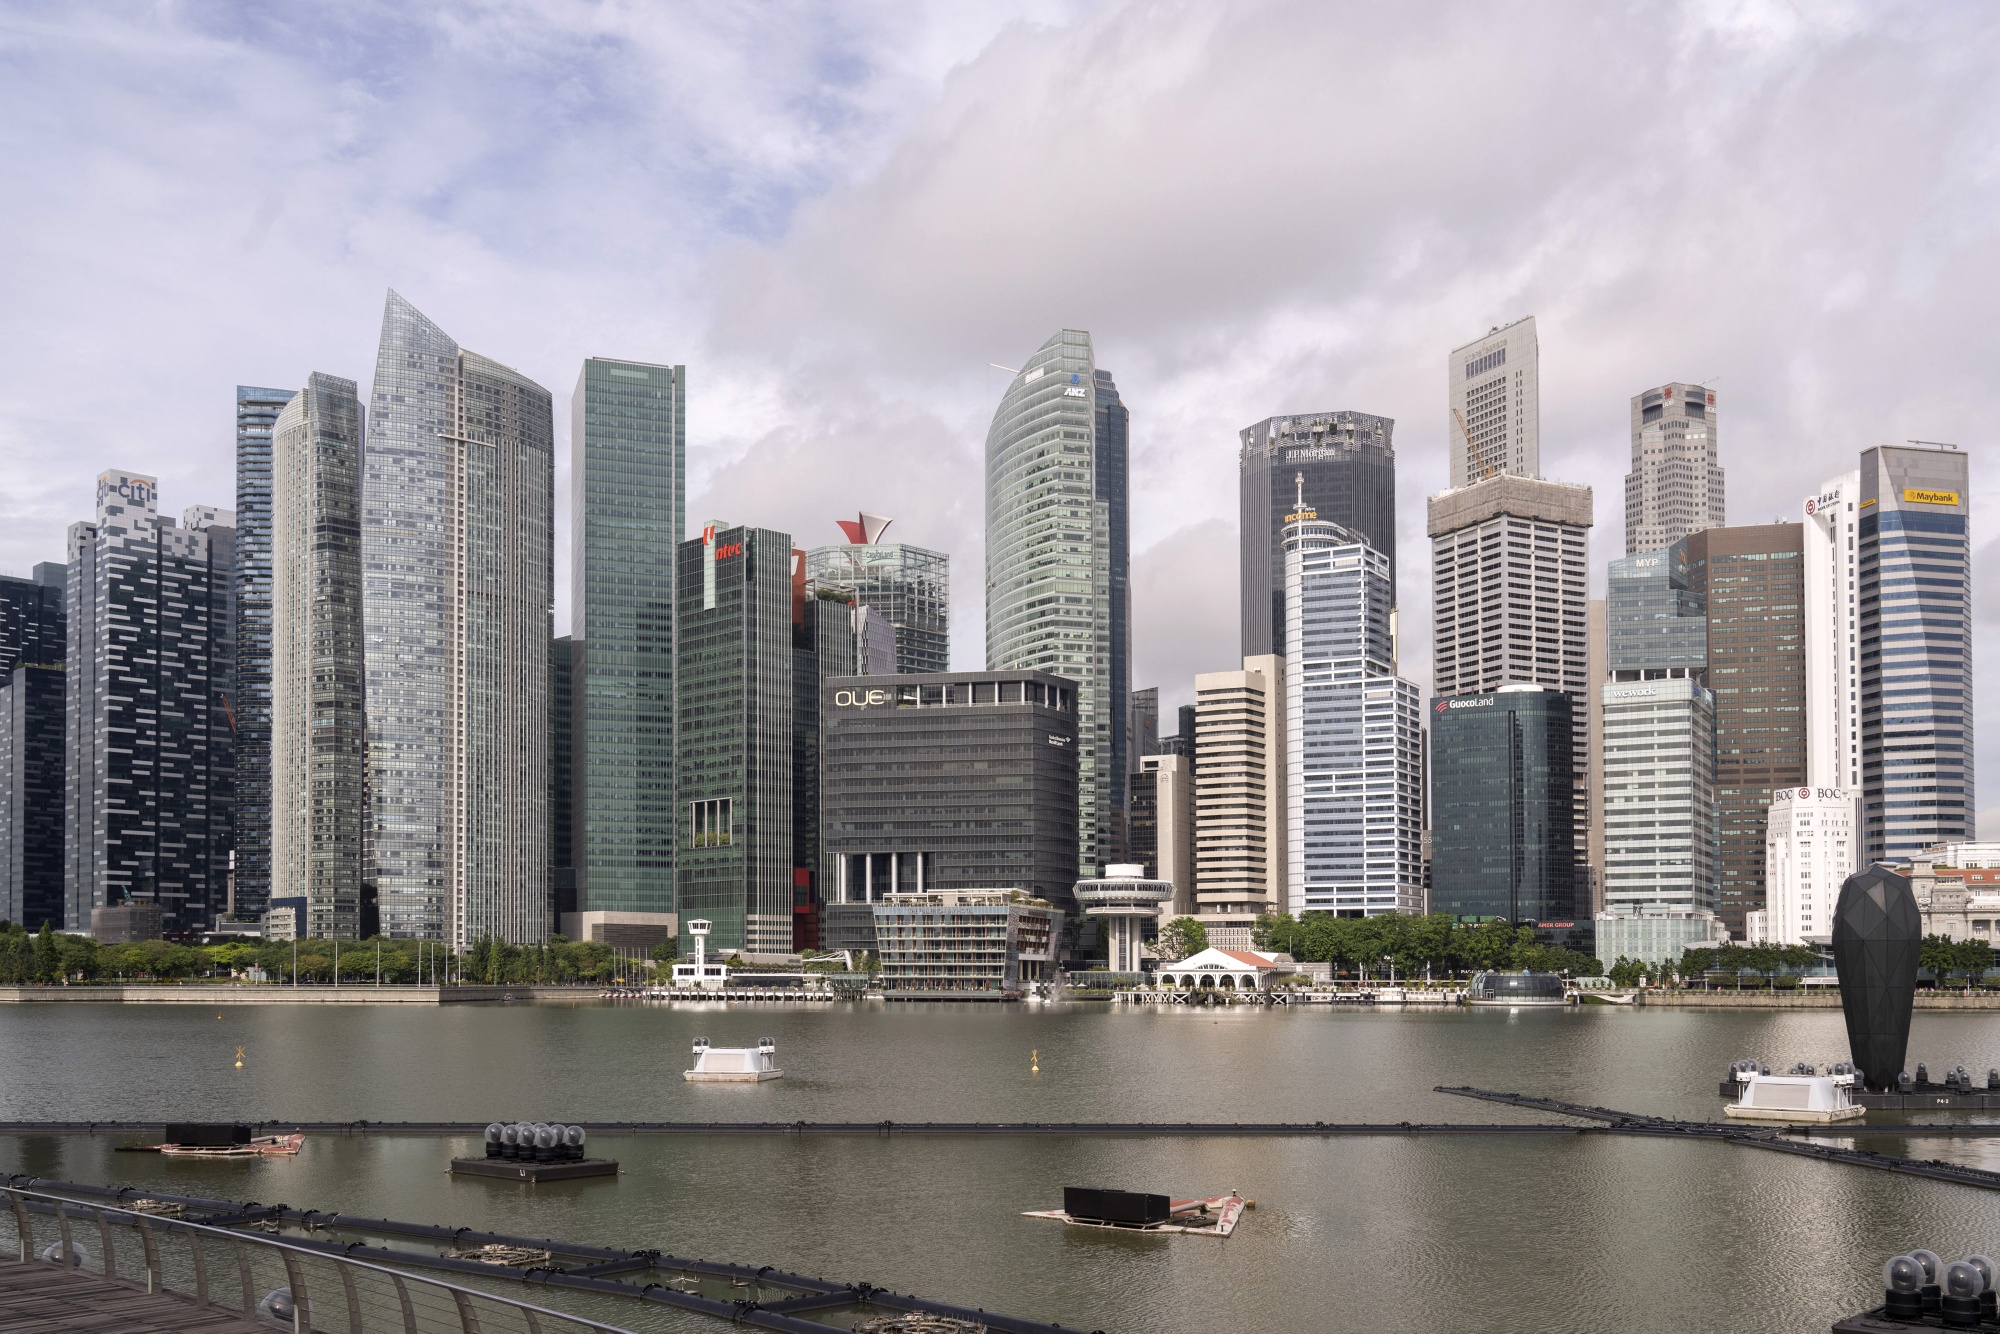 Singapore’s business district.